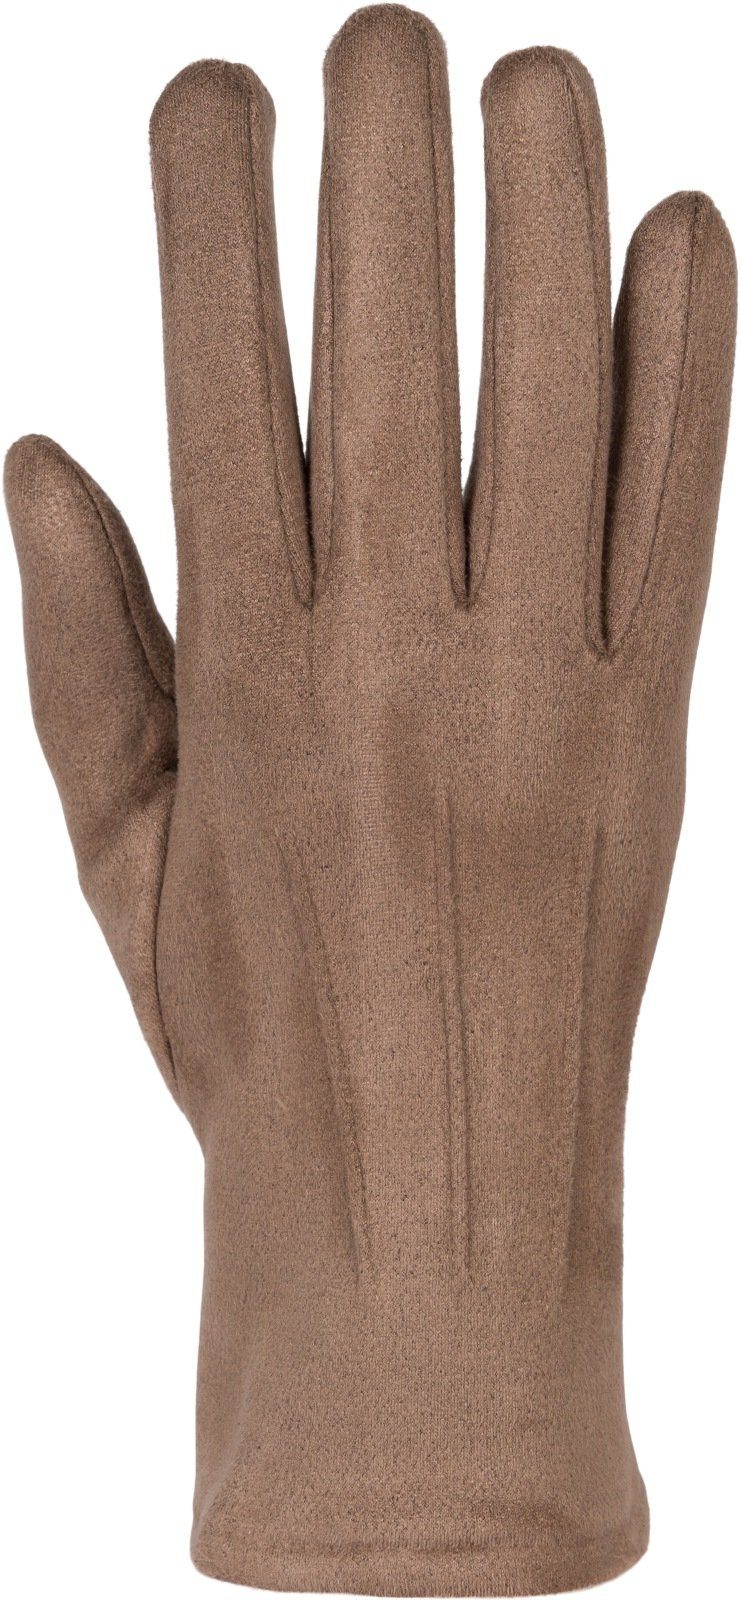 styleBREAKER Fleecehandschuhe Einfarbige Touchscreen Ziernähte Handschuhe Taupe